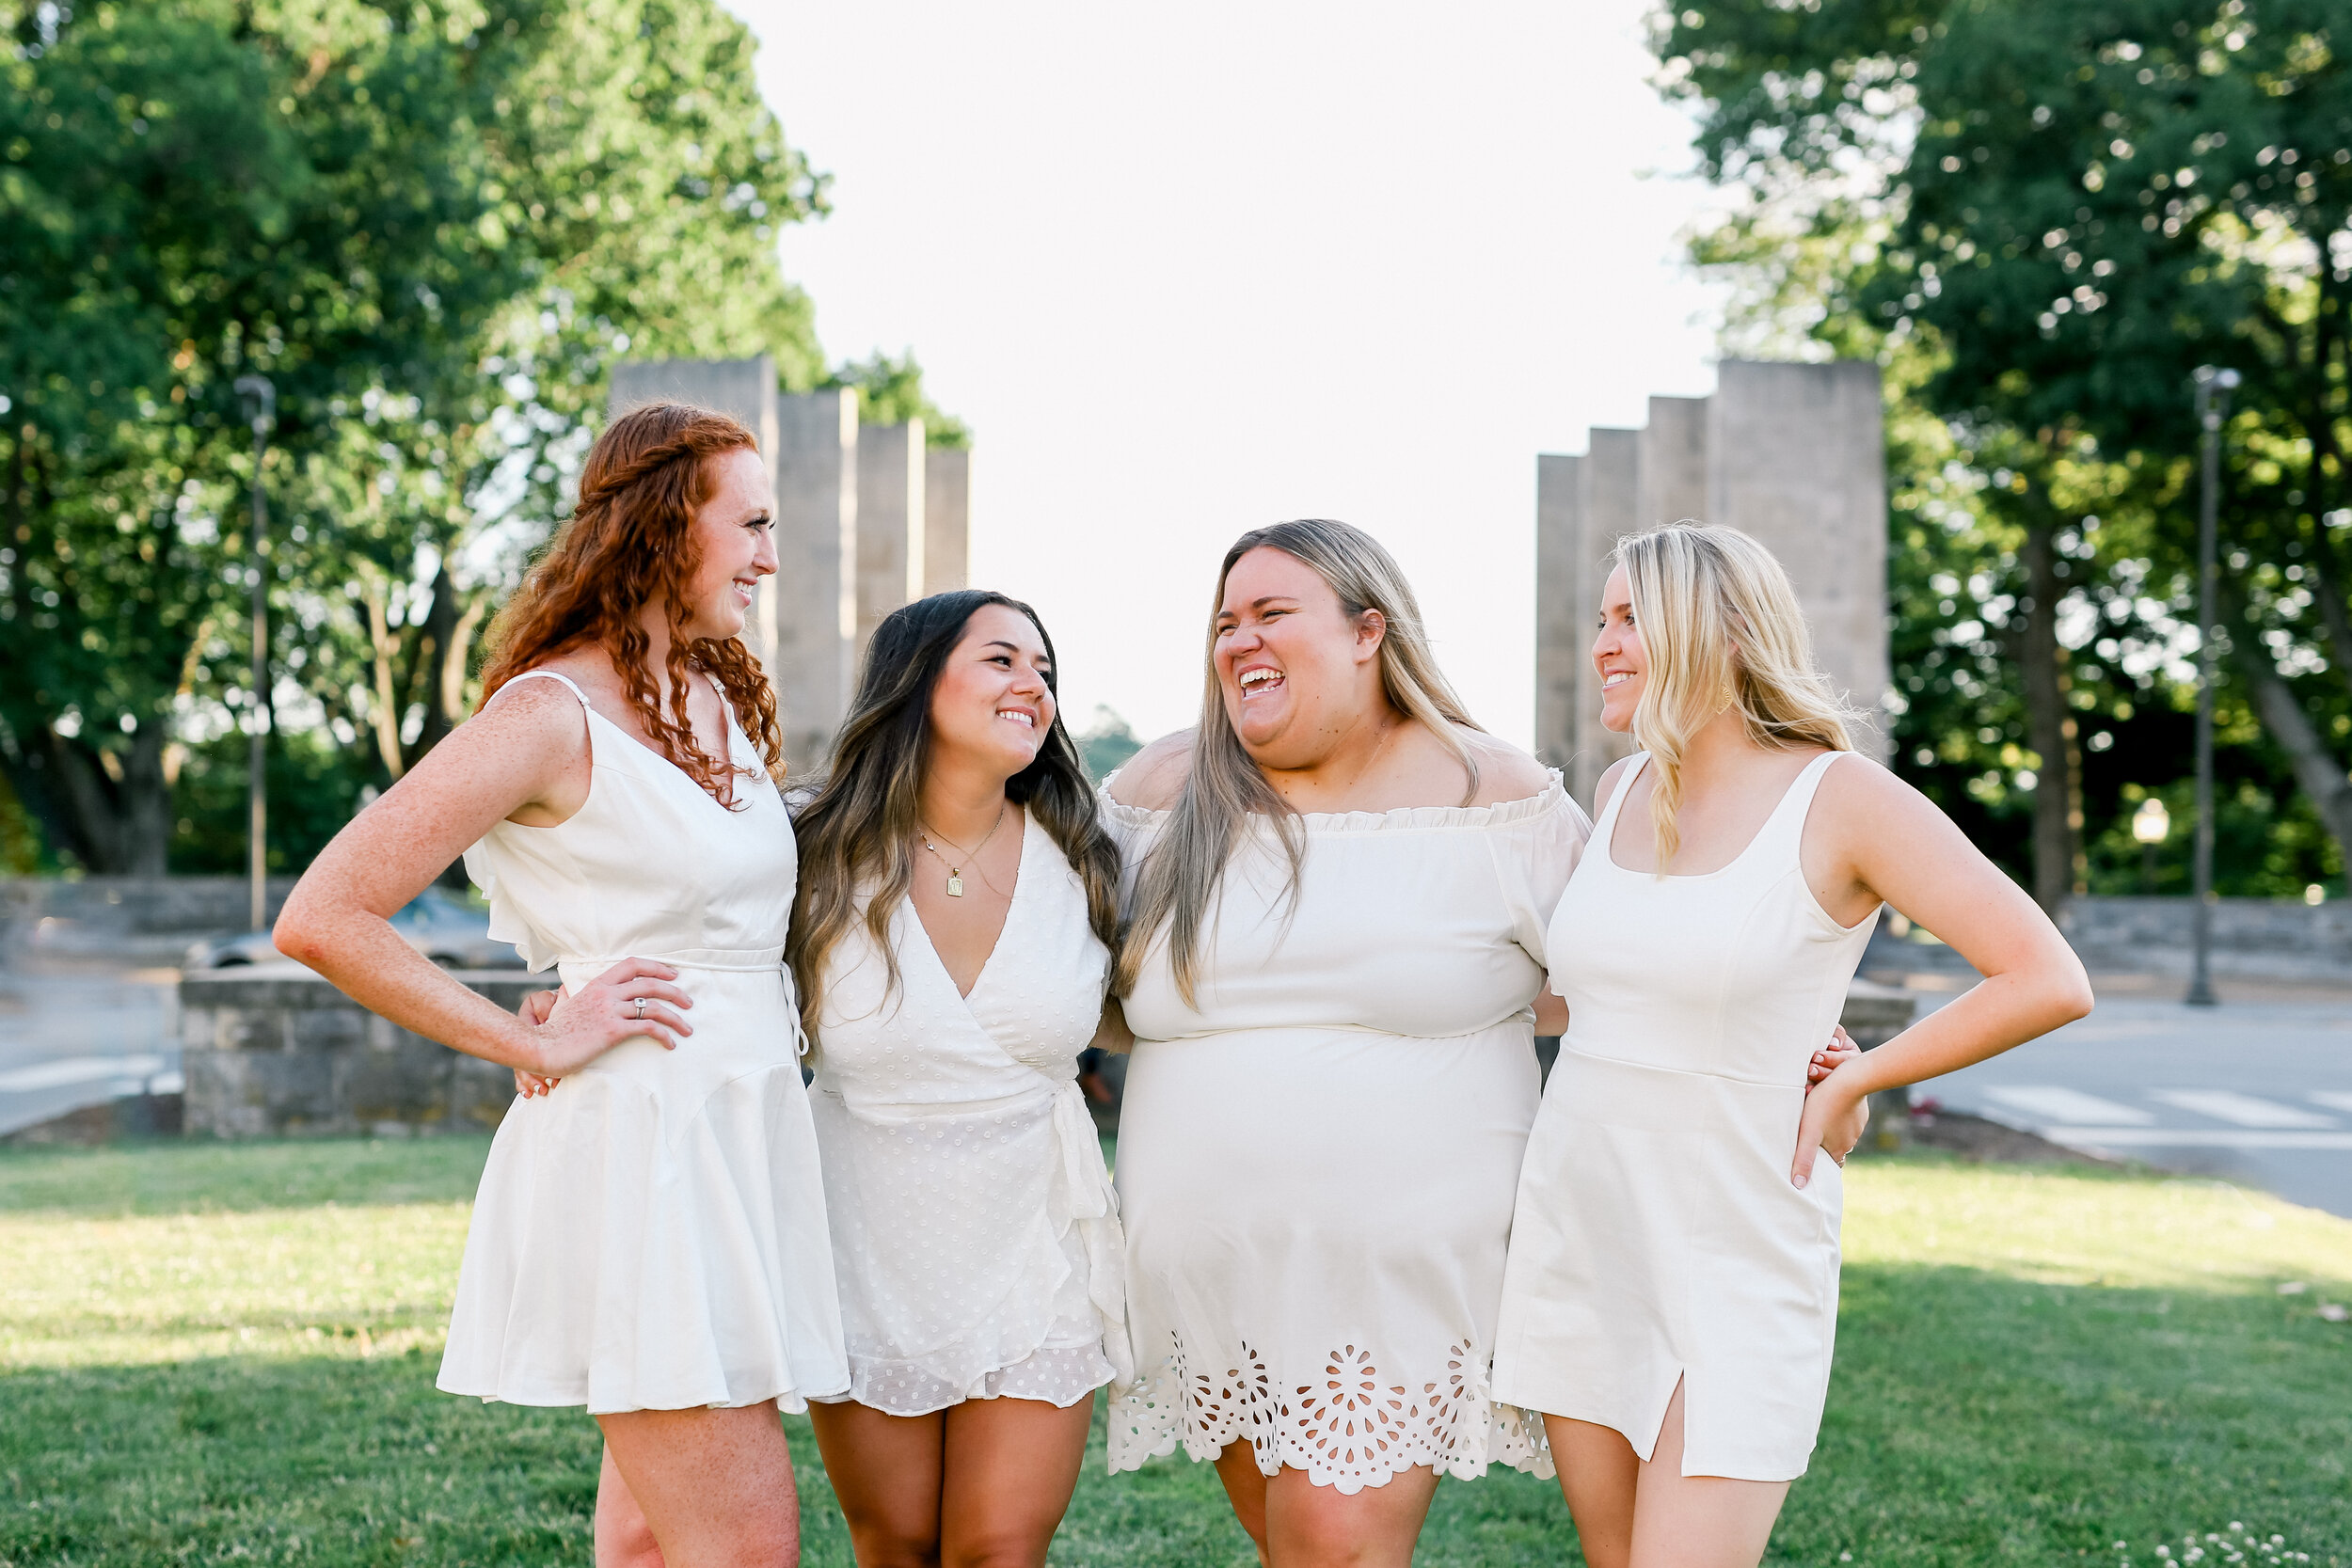 Virginia Tech sorority sisters graduation pictures